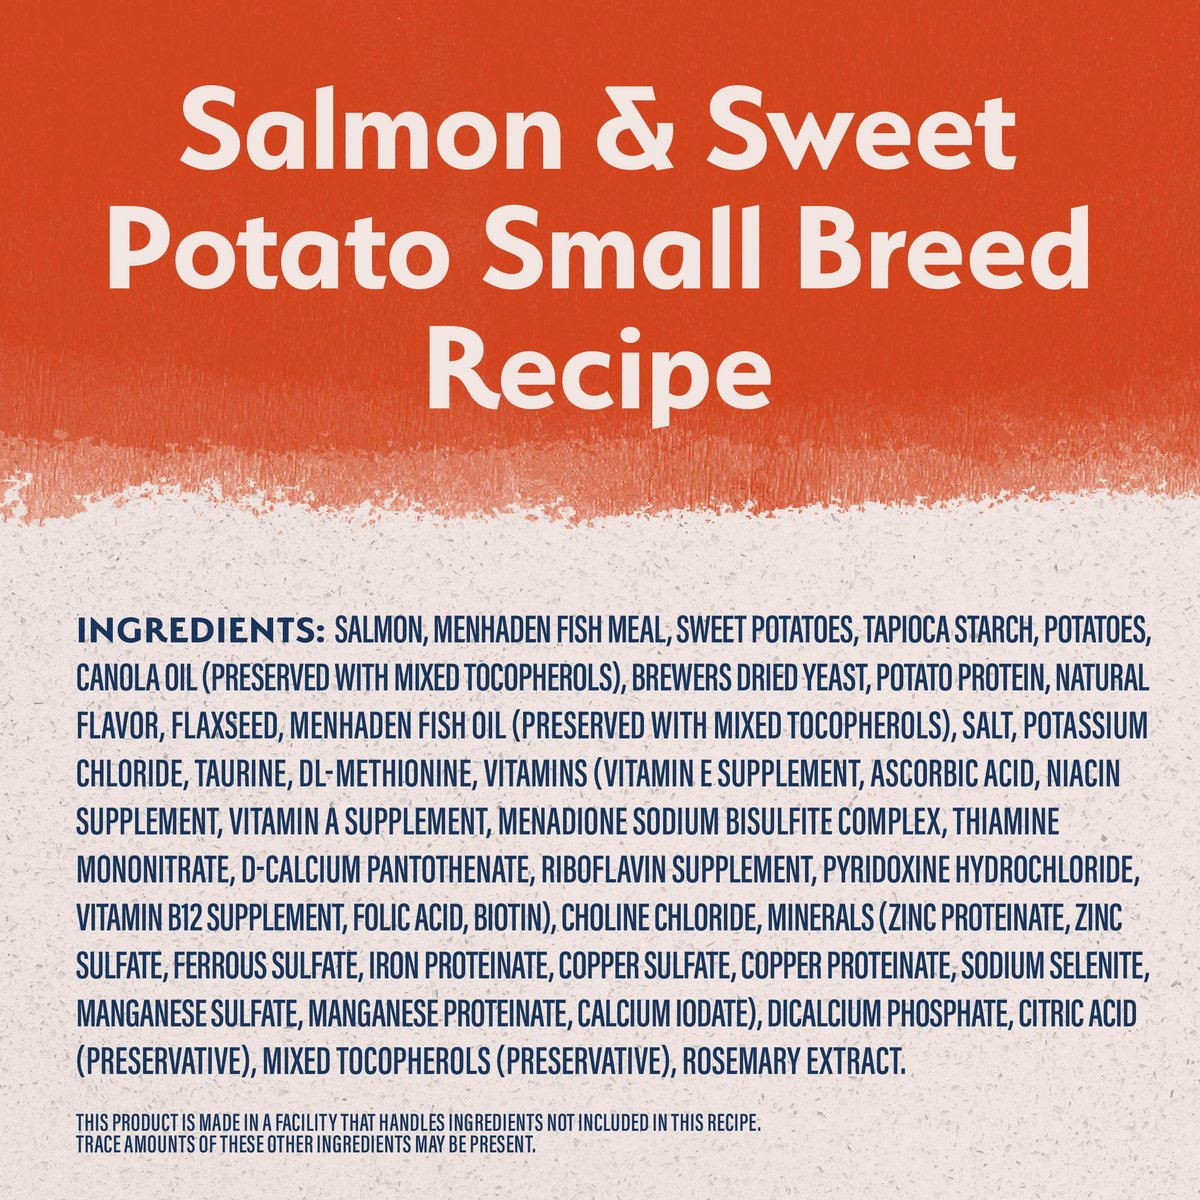 Natural Balance Grain Free Salmon & Sweet Potato Small Breed Dog Food  Dog Food  | PetMax Canada